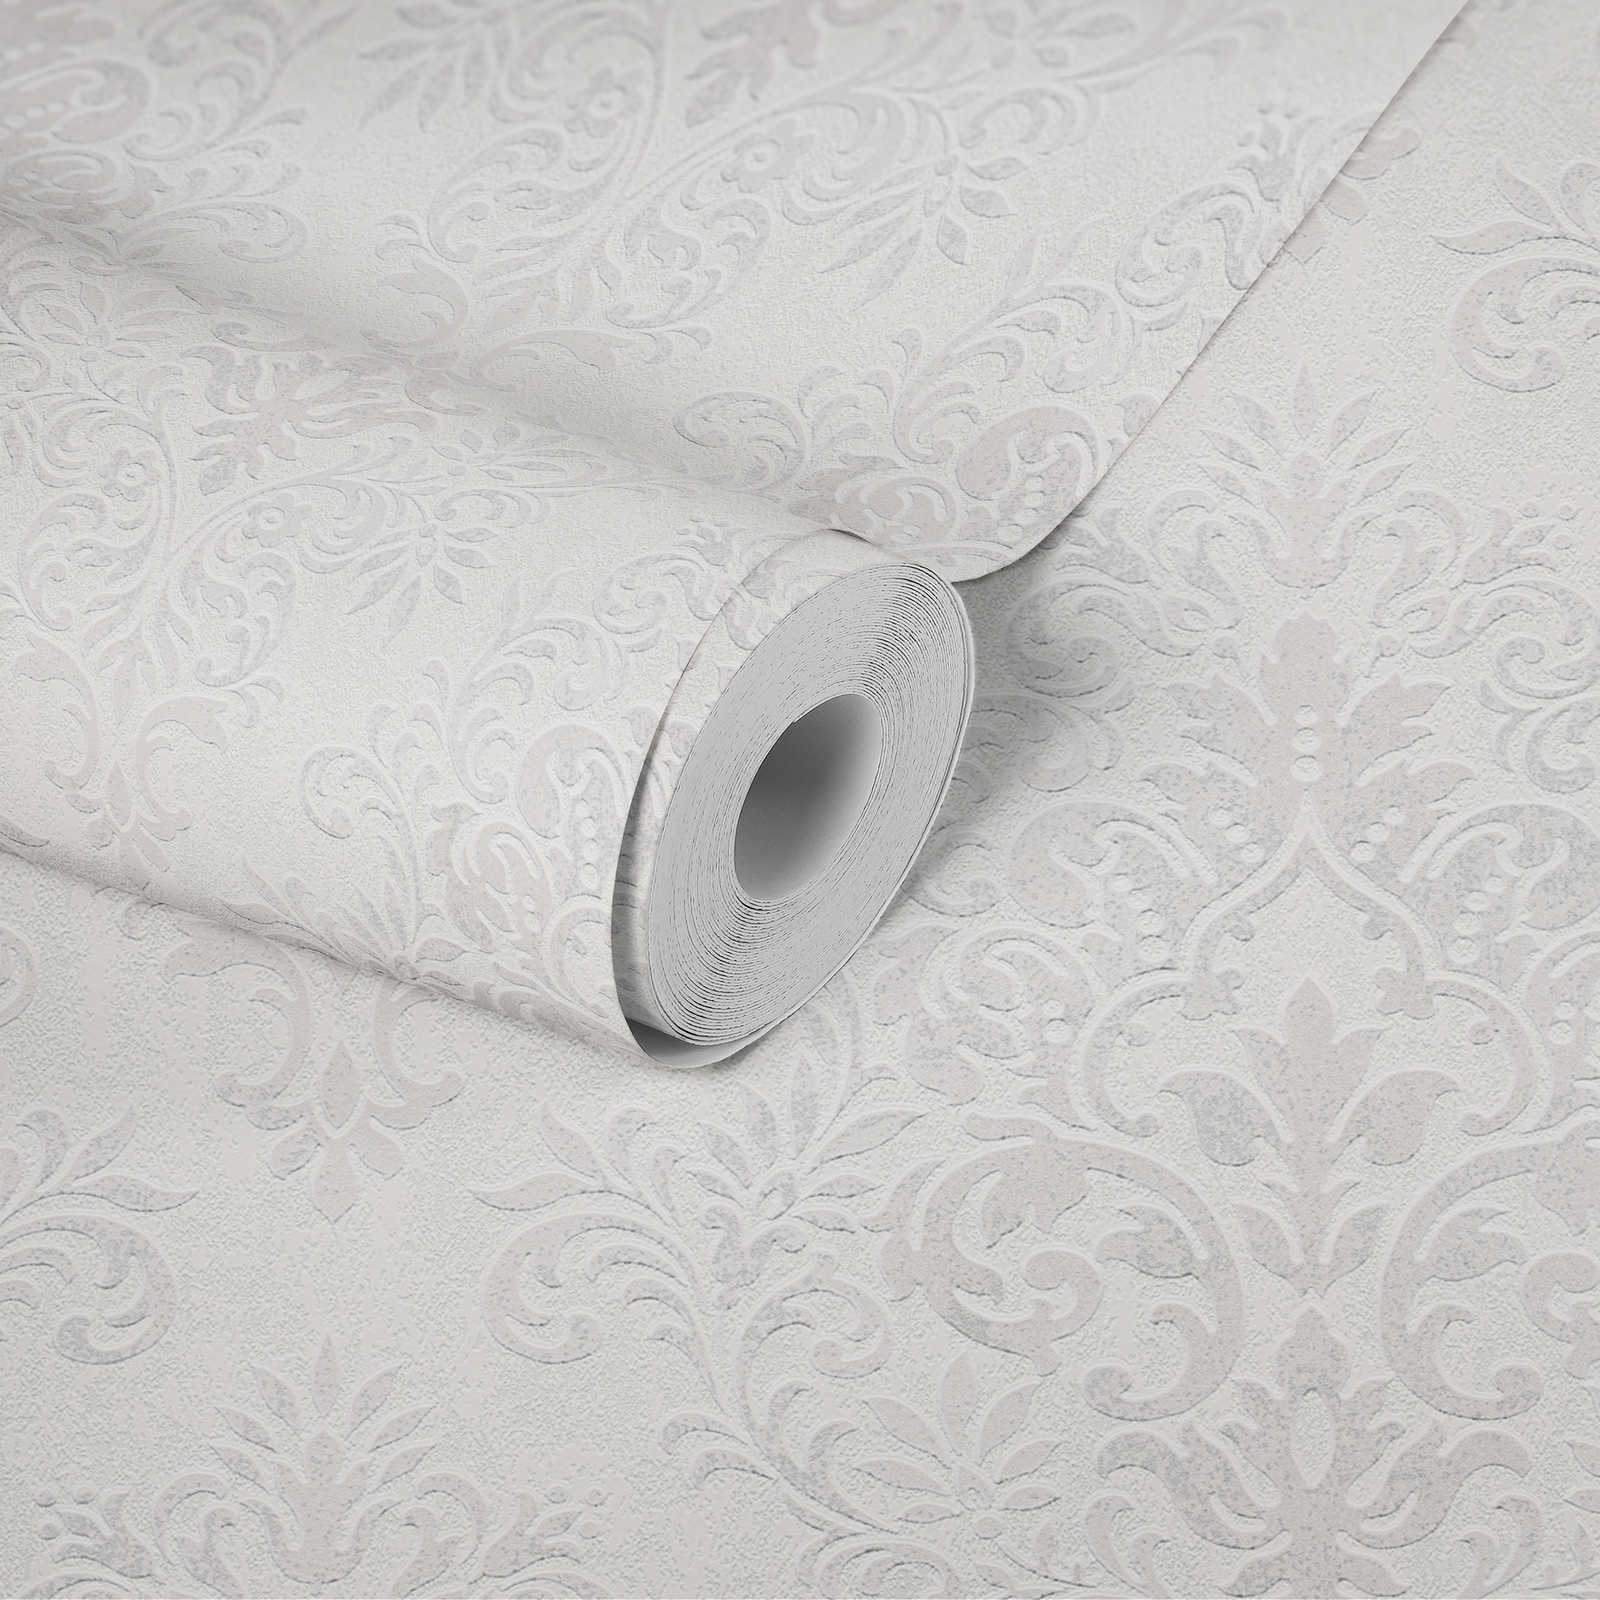             Non-woven wallpaper ornament design with metallic accents - grey
        